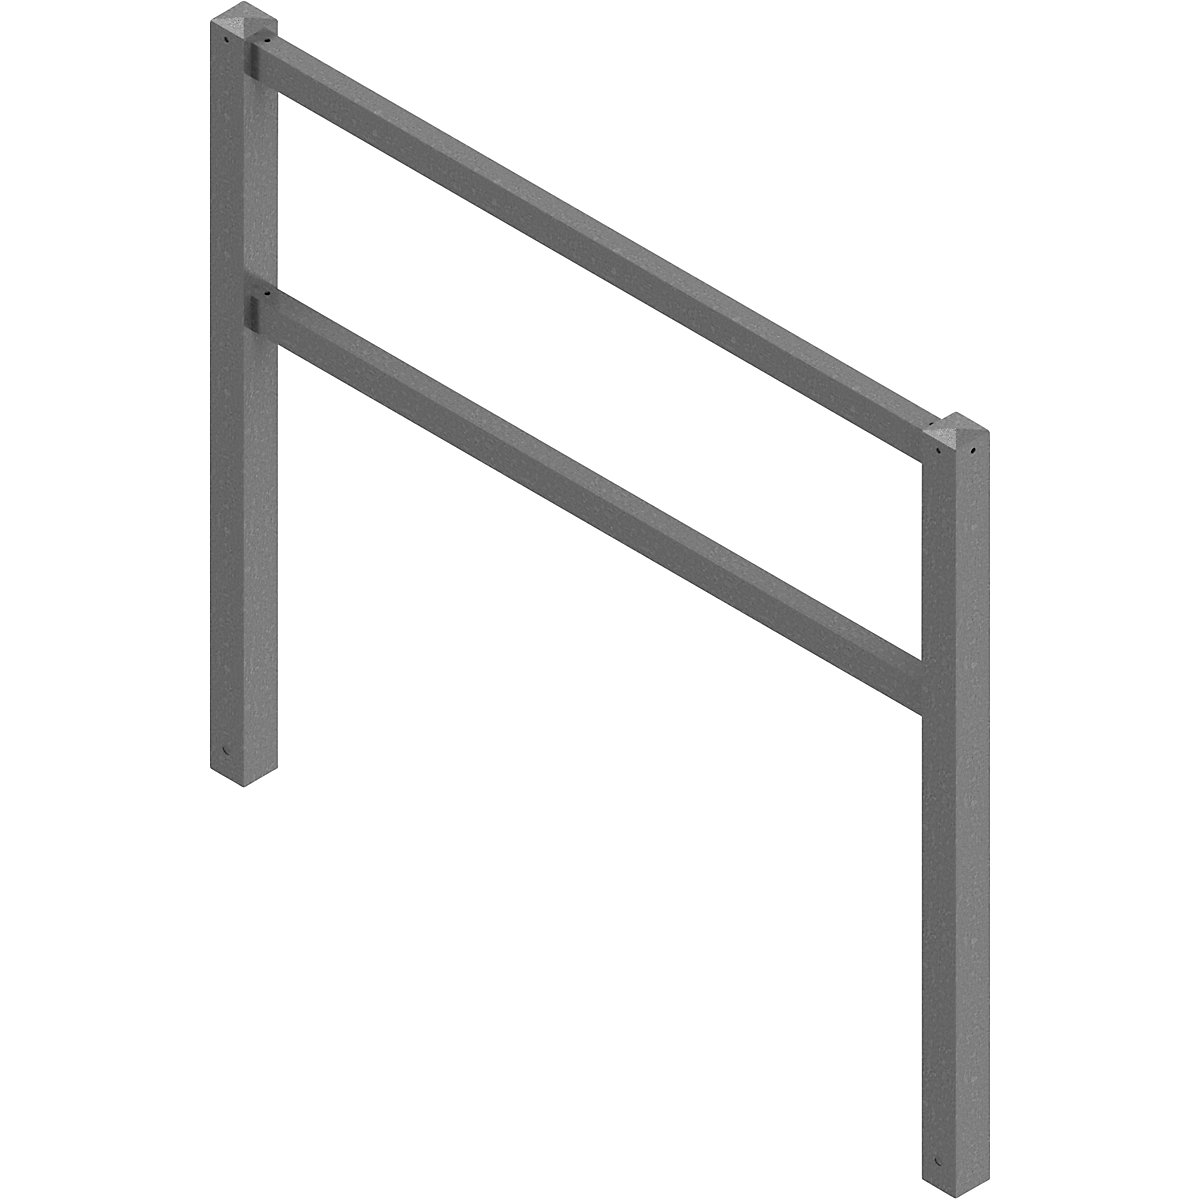 Access barrier, welded